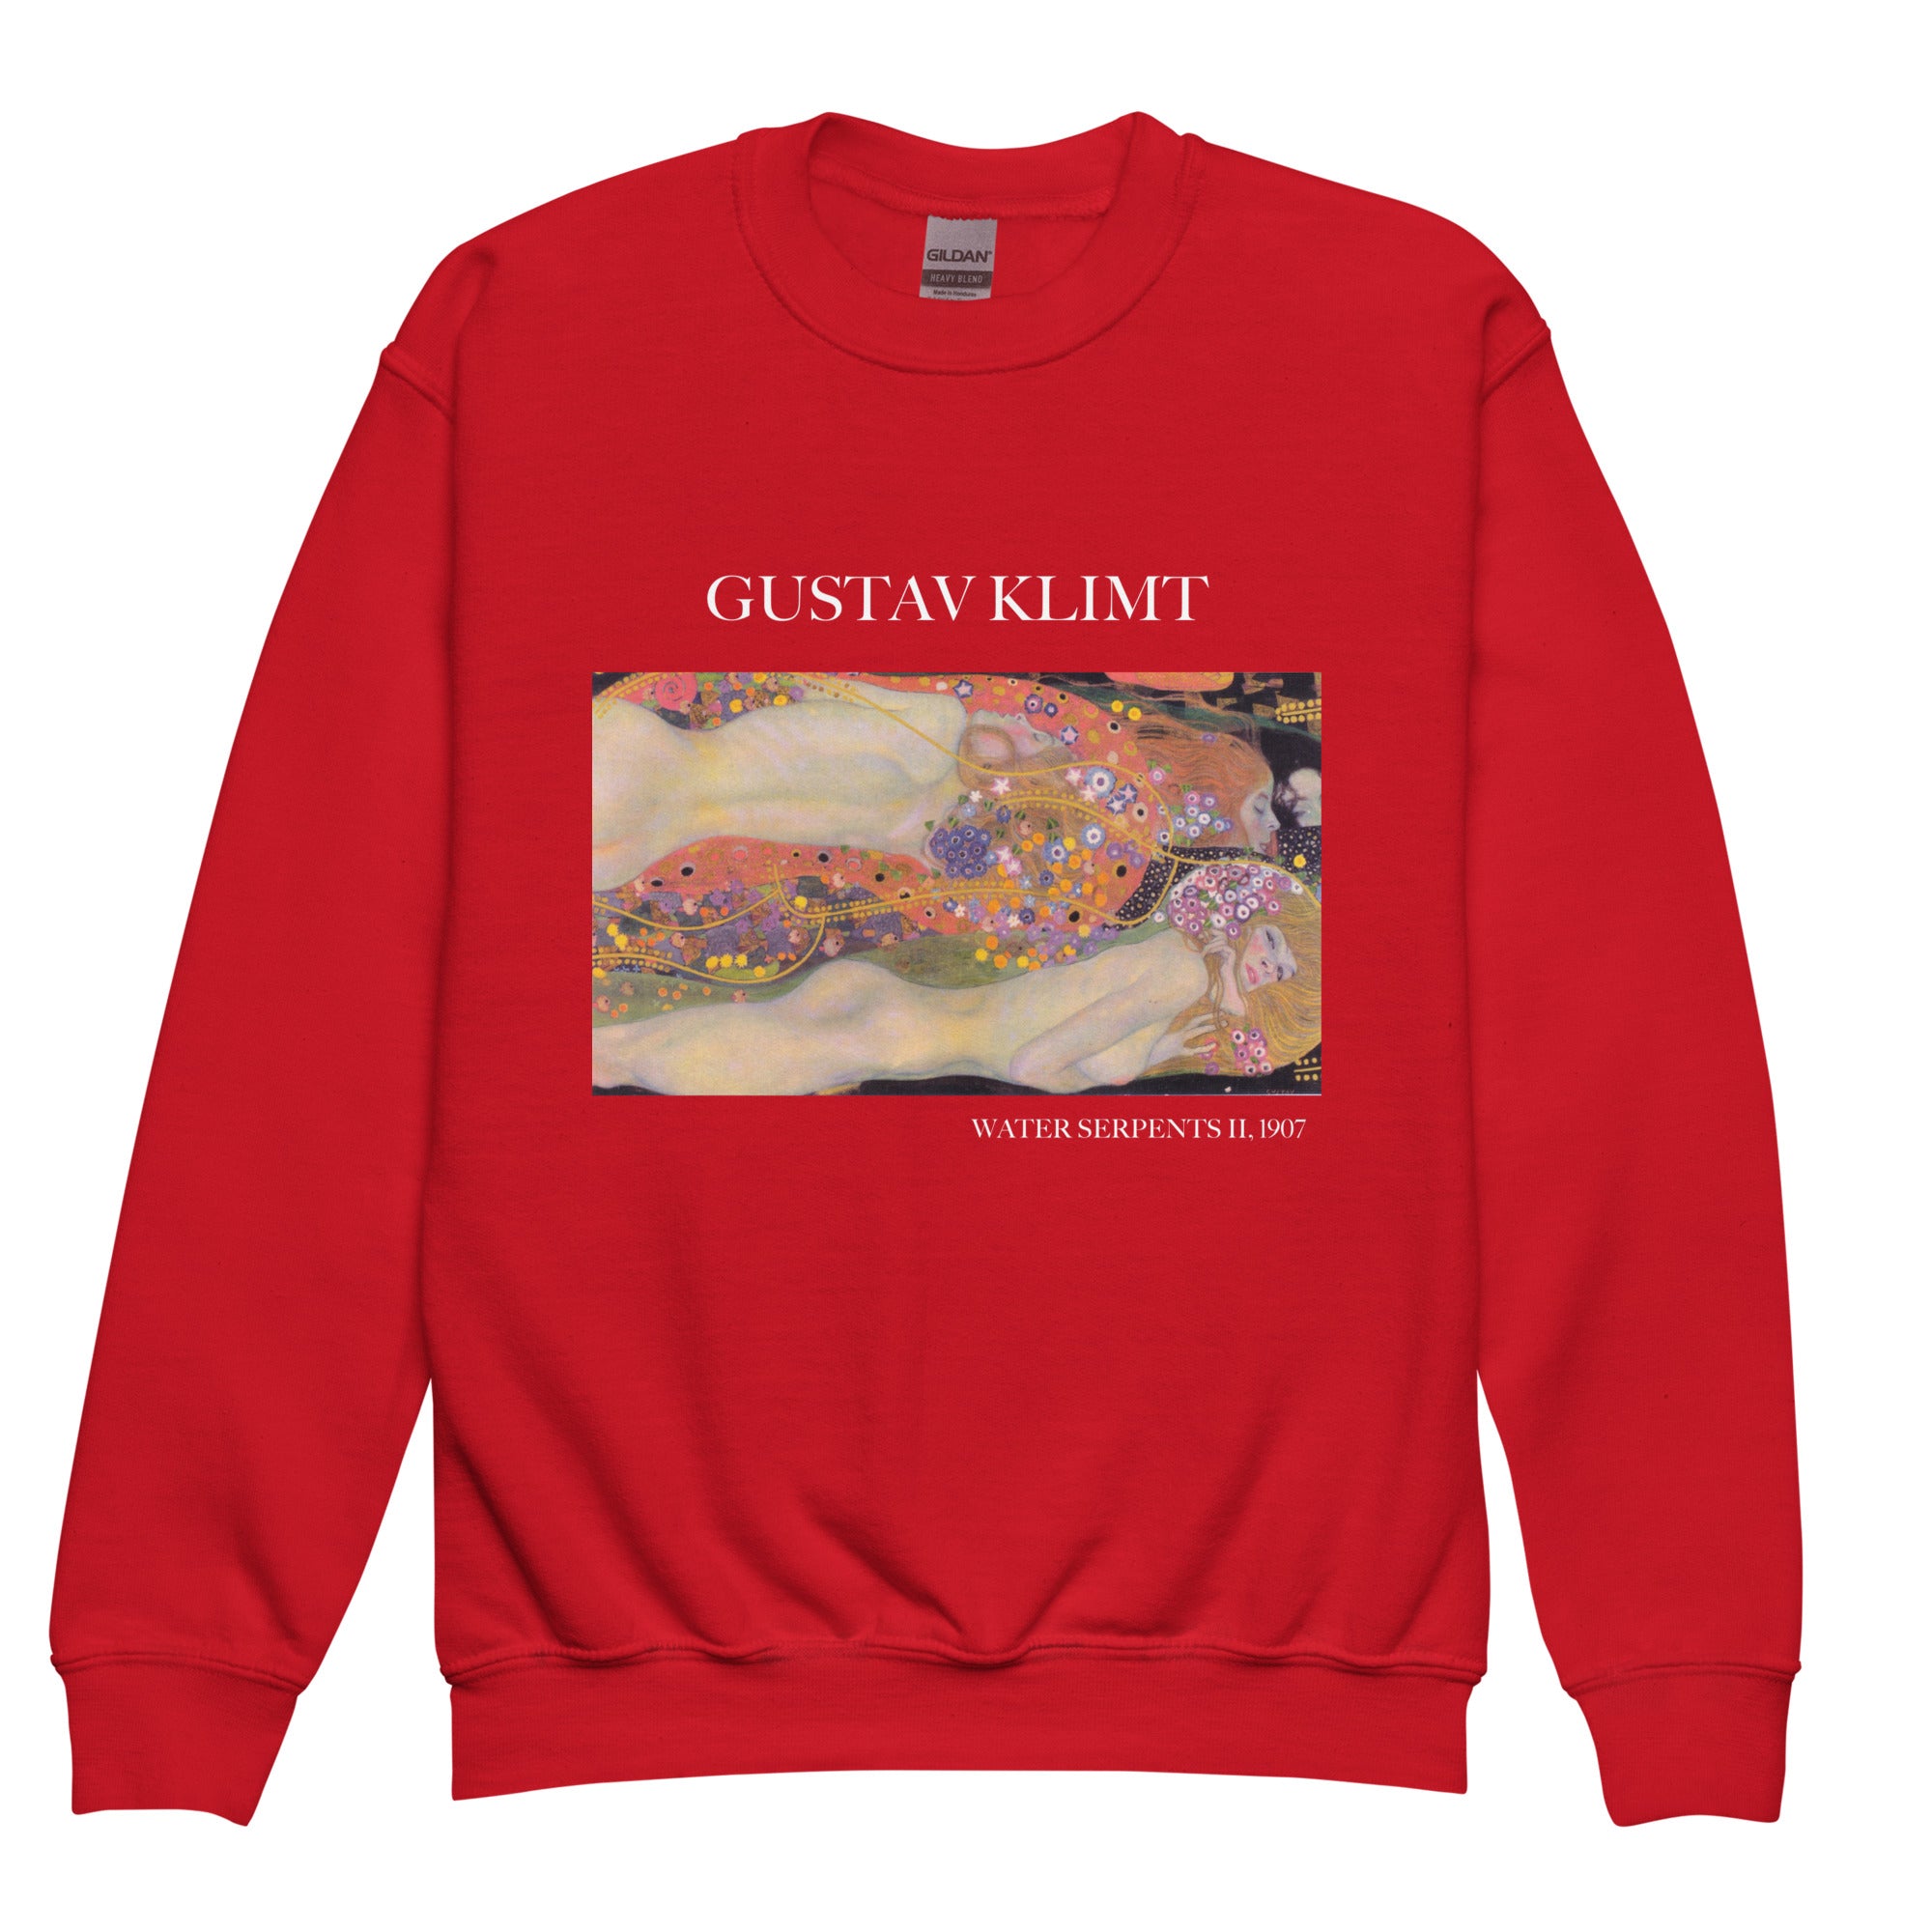 Gustav Klimt 'Water Serpents II' Famous Painting Crewneck Sweatshirt | Premium Youth Art Sweatshirt